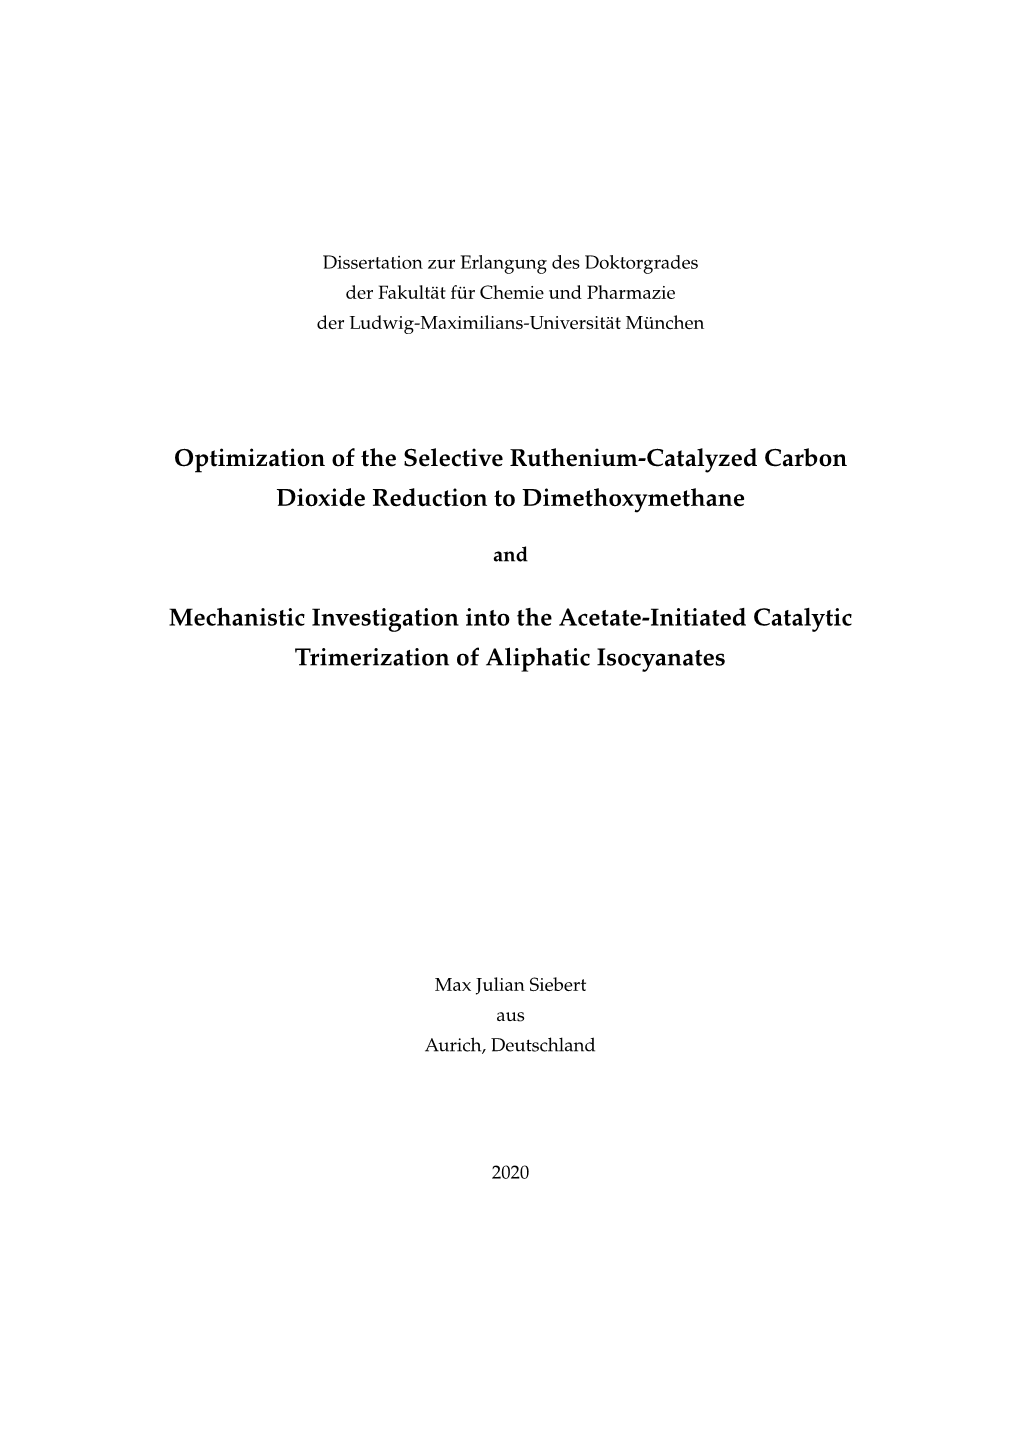 Optimization of the Selective Ruthenium-Catalyzed Carbon Dioxide Reduction to Dimethoxymethane and Mechanistic Investigation